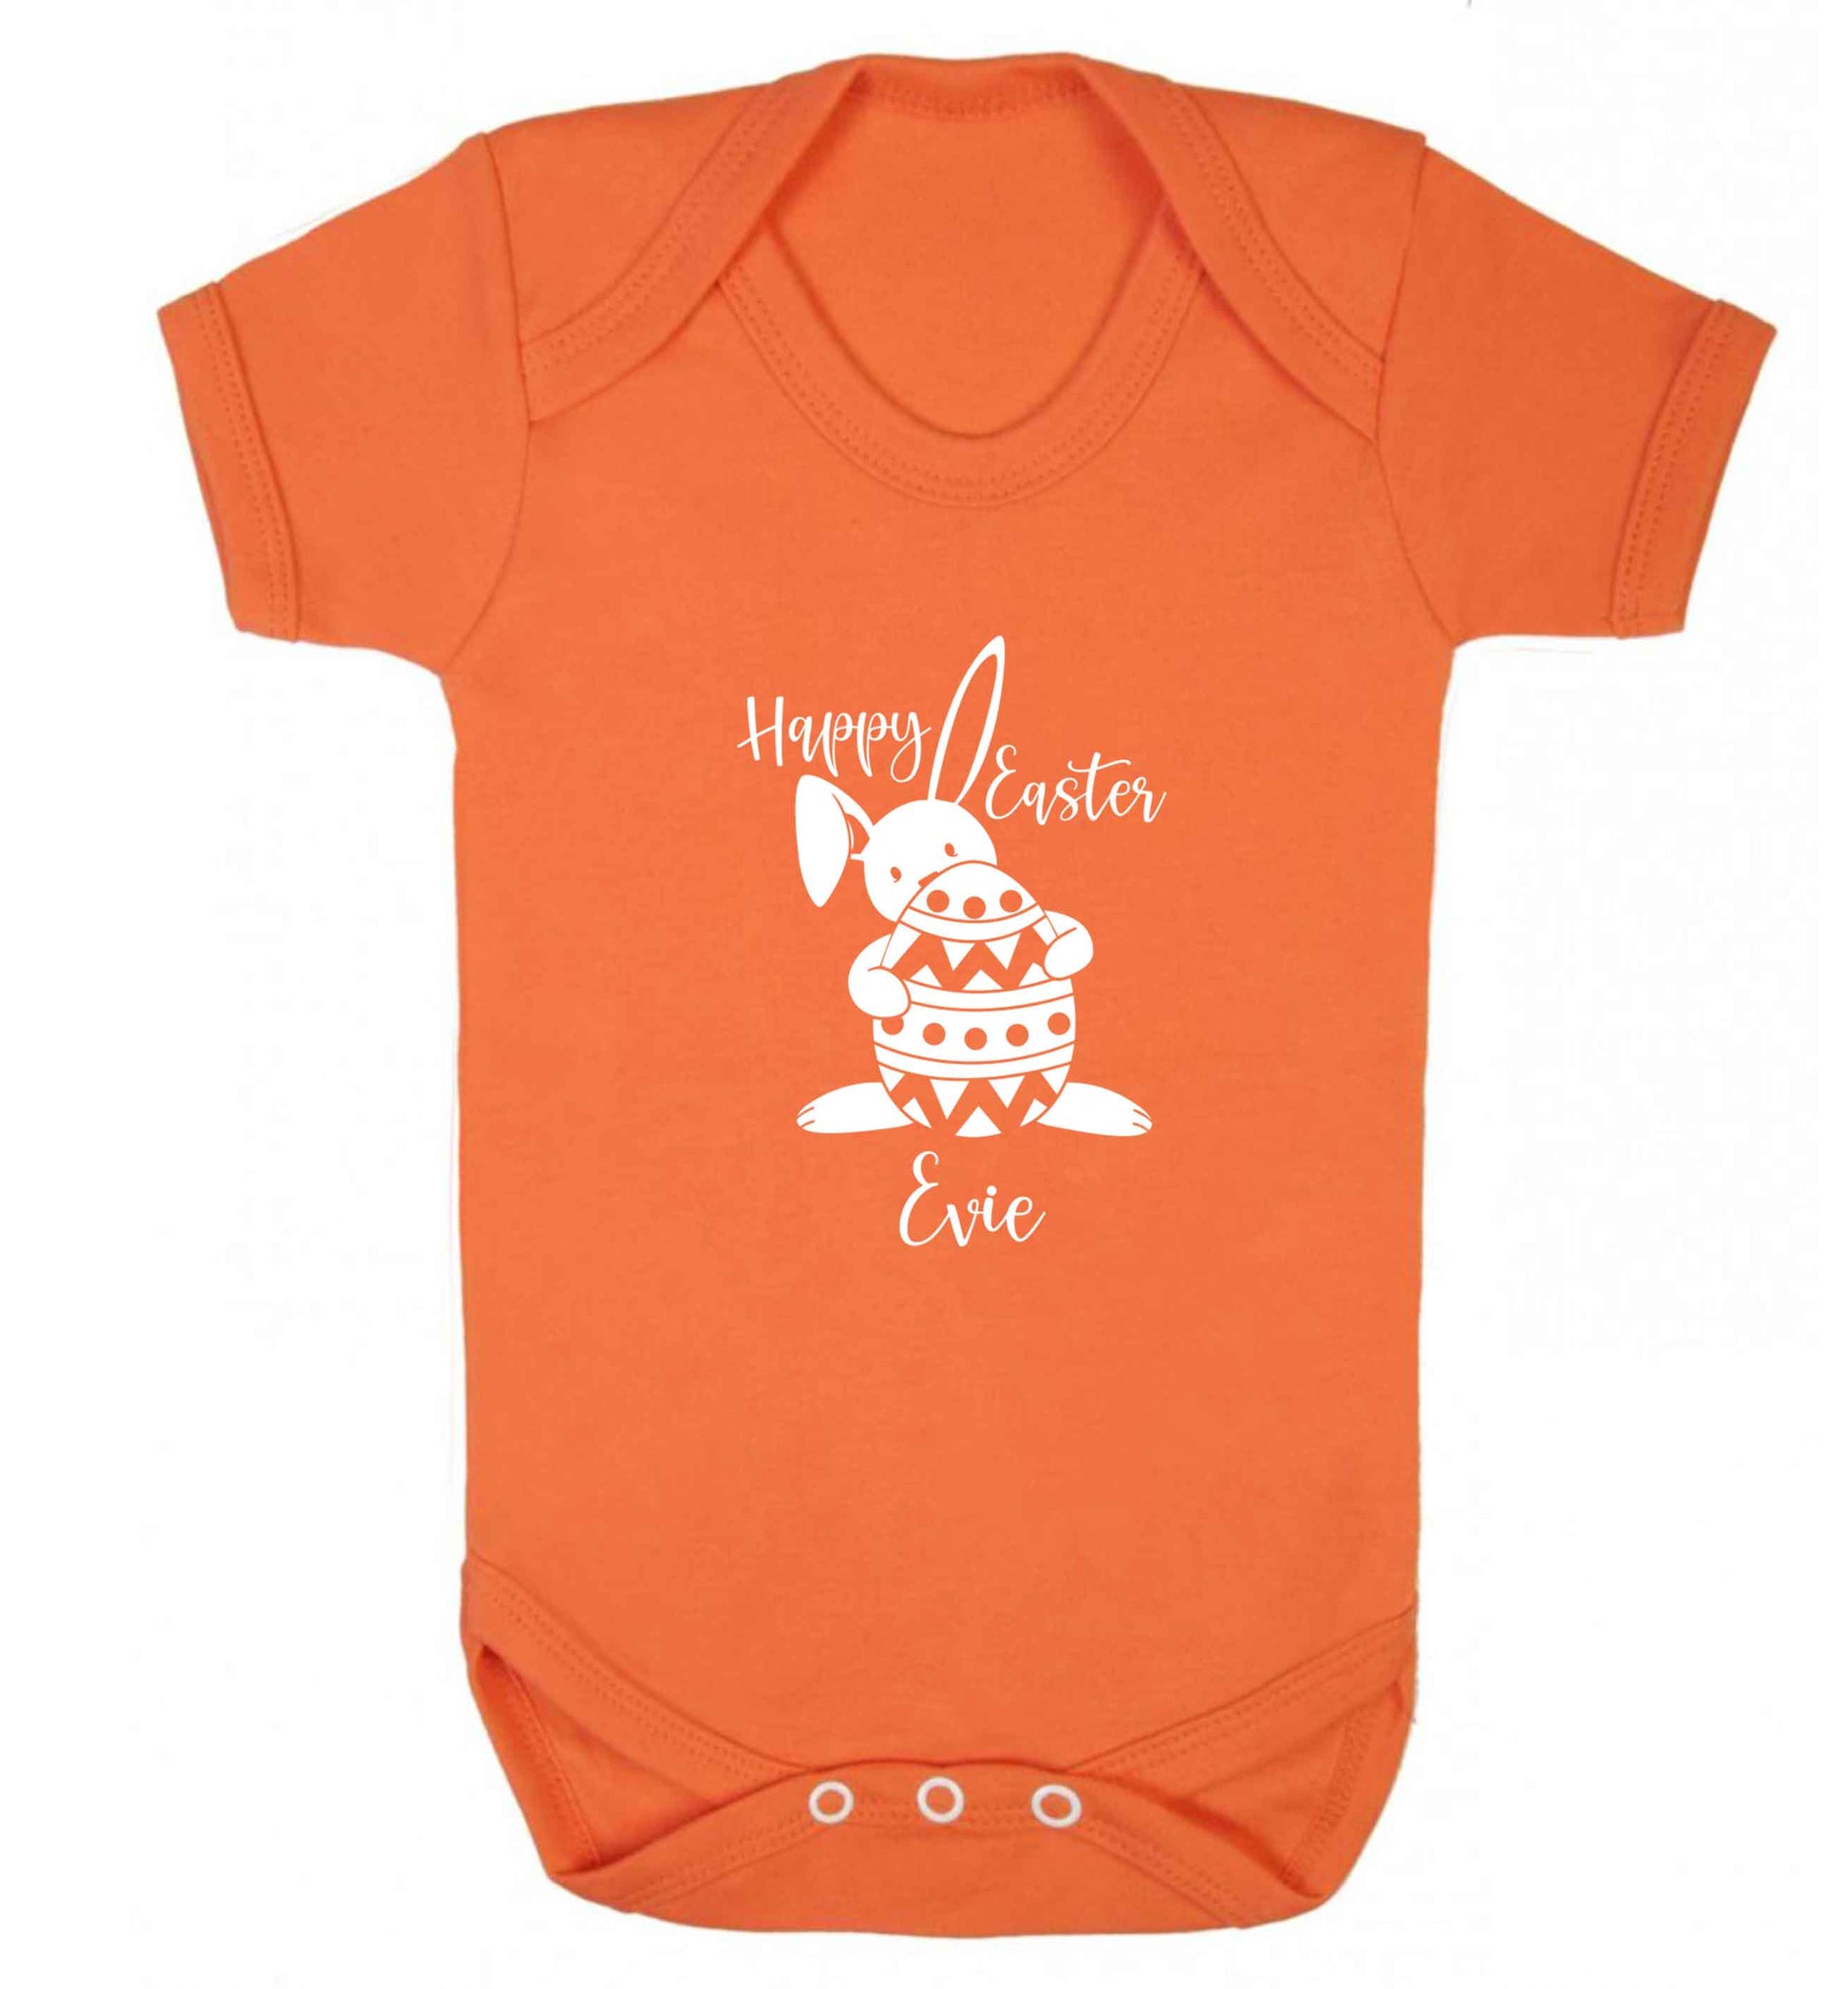 Happy Easter - personalised baby vest orange 18-24 months